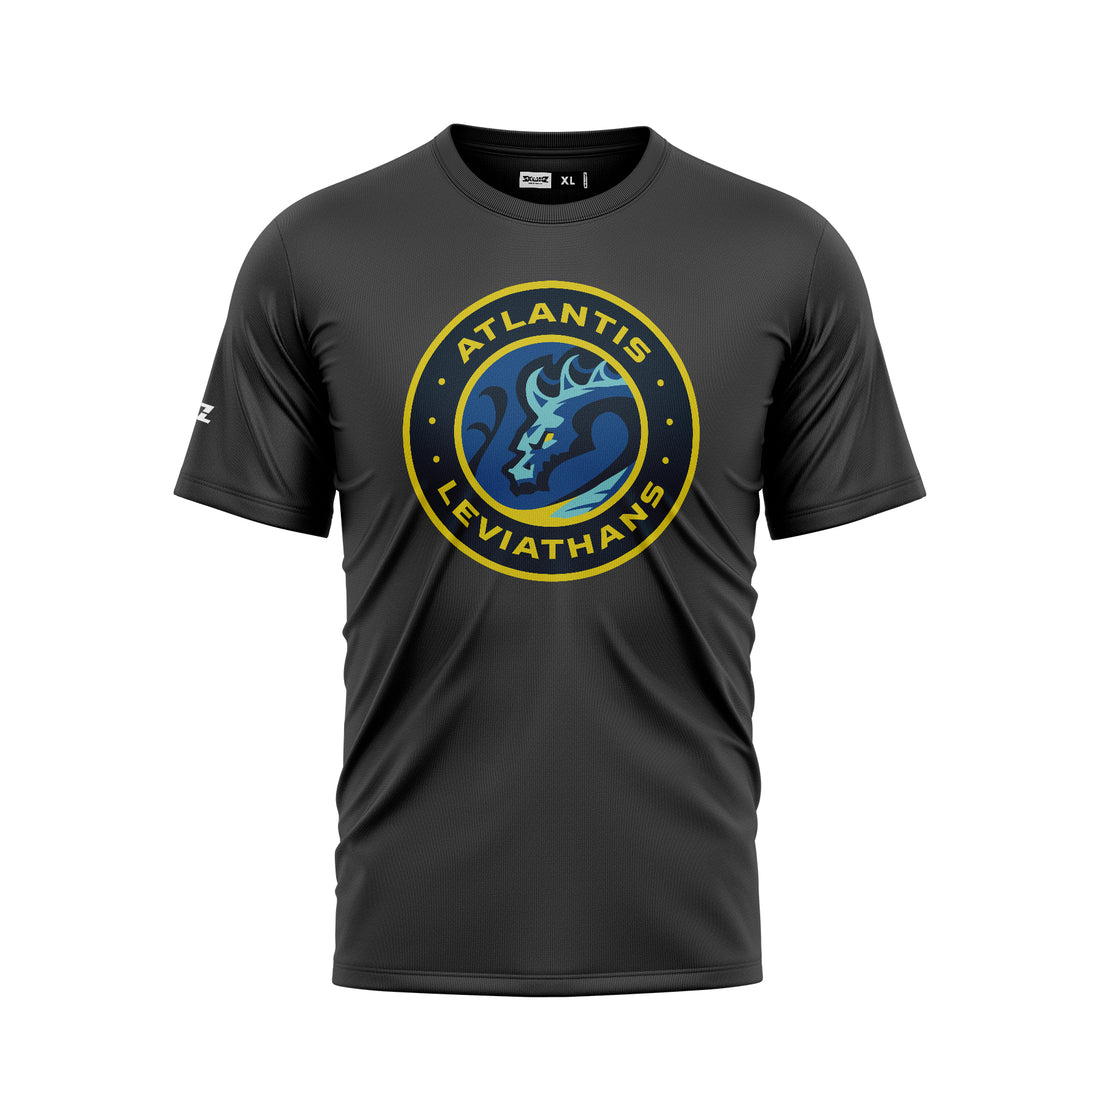 Atlantis Leviathans Emblem Shirt